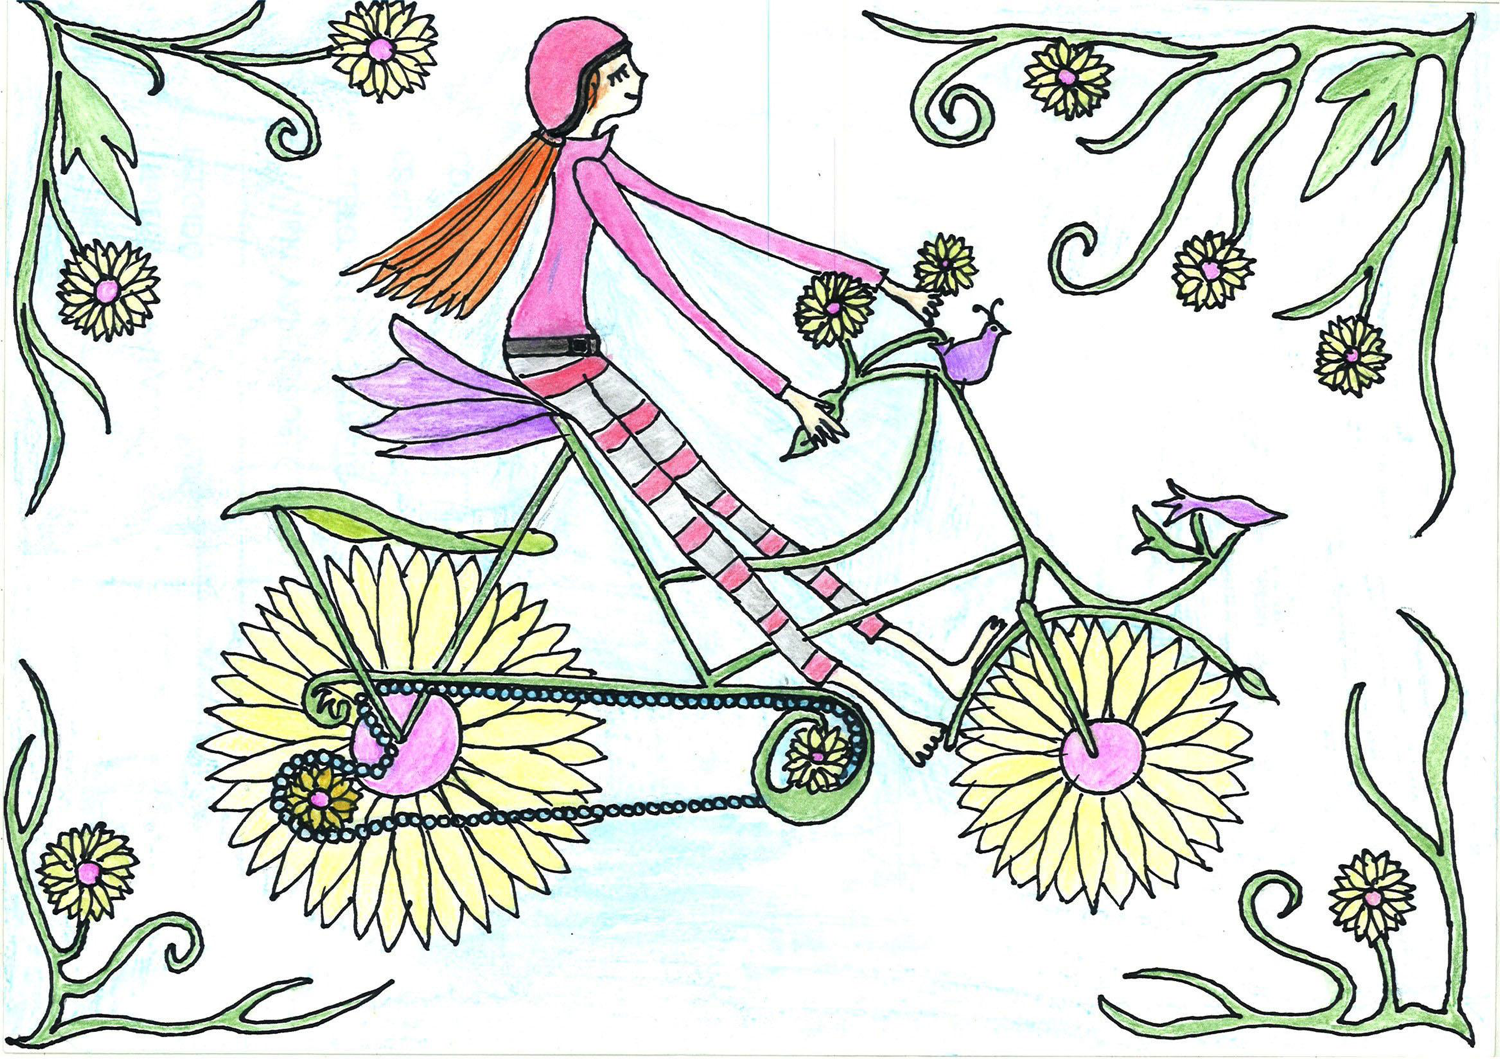 Niña en bici con ruedas de flores en escena fantástica